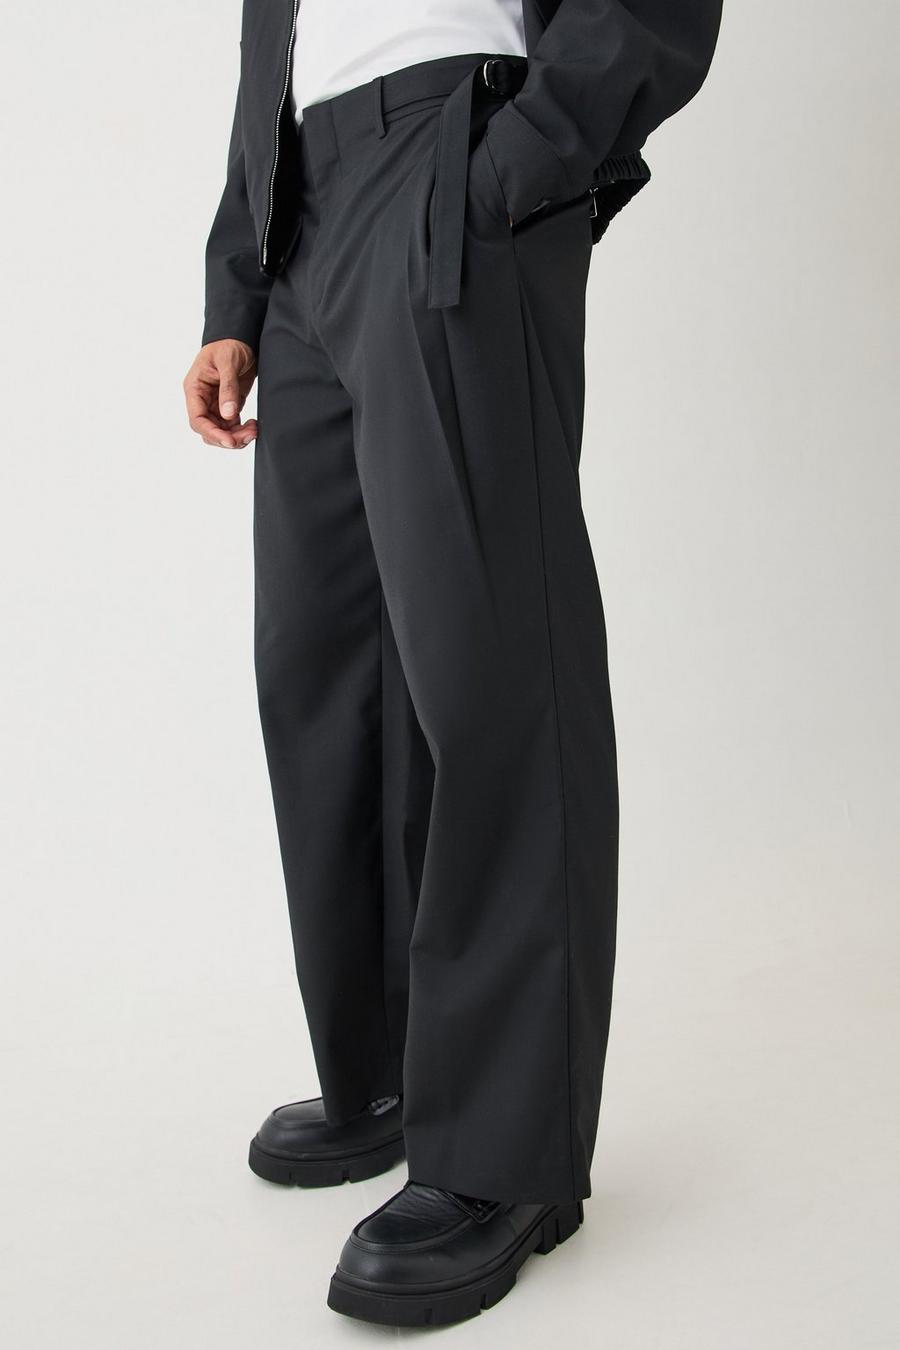 Pantaloni formali a calzata ampia, Black